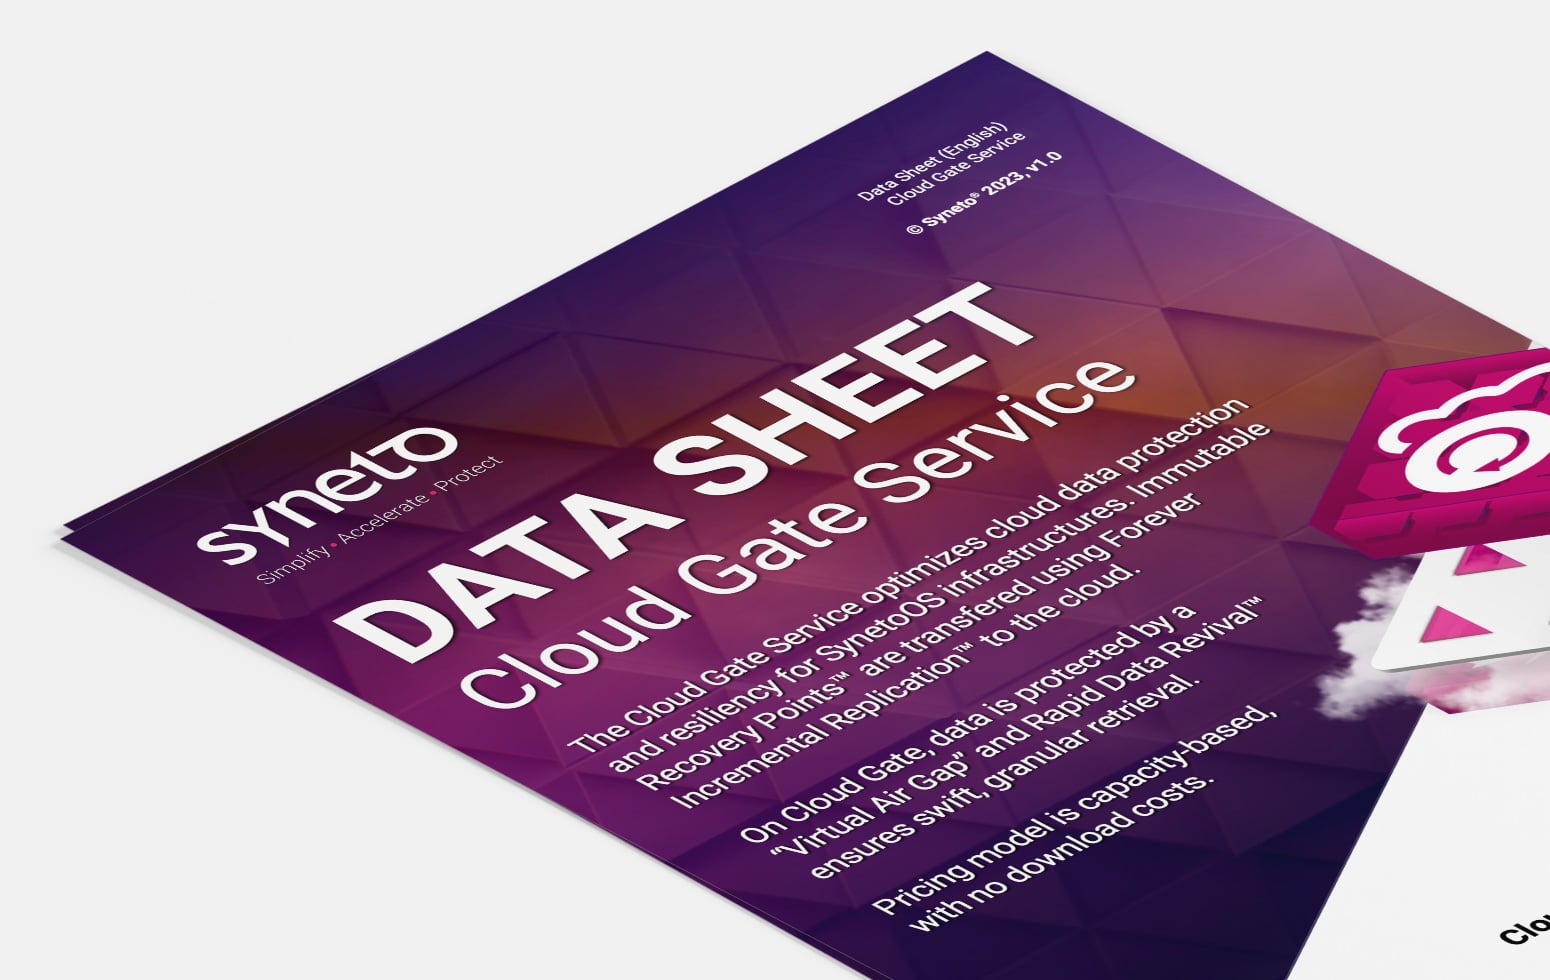 data-sheet-cloud-gate-service-website-cover-image-en-export